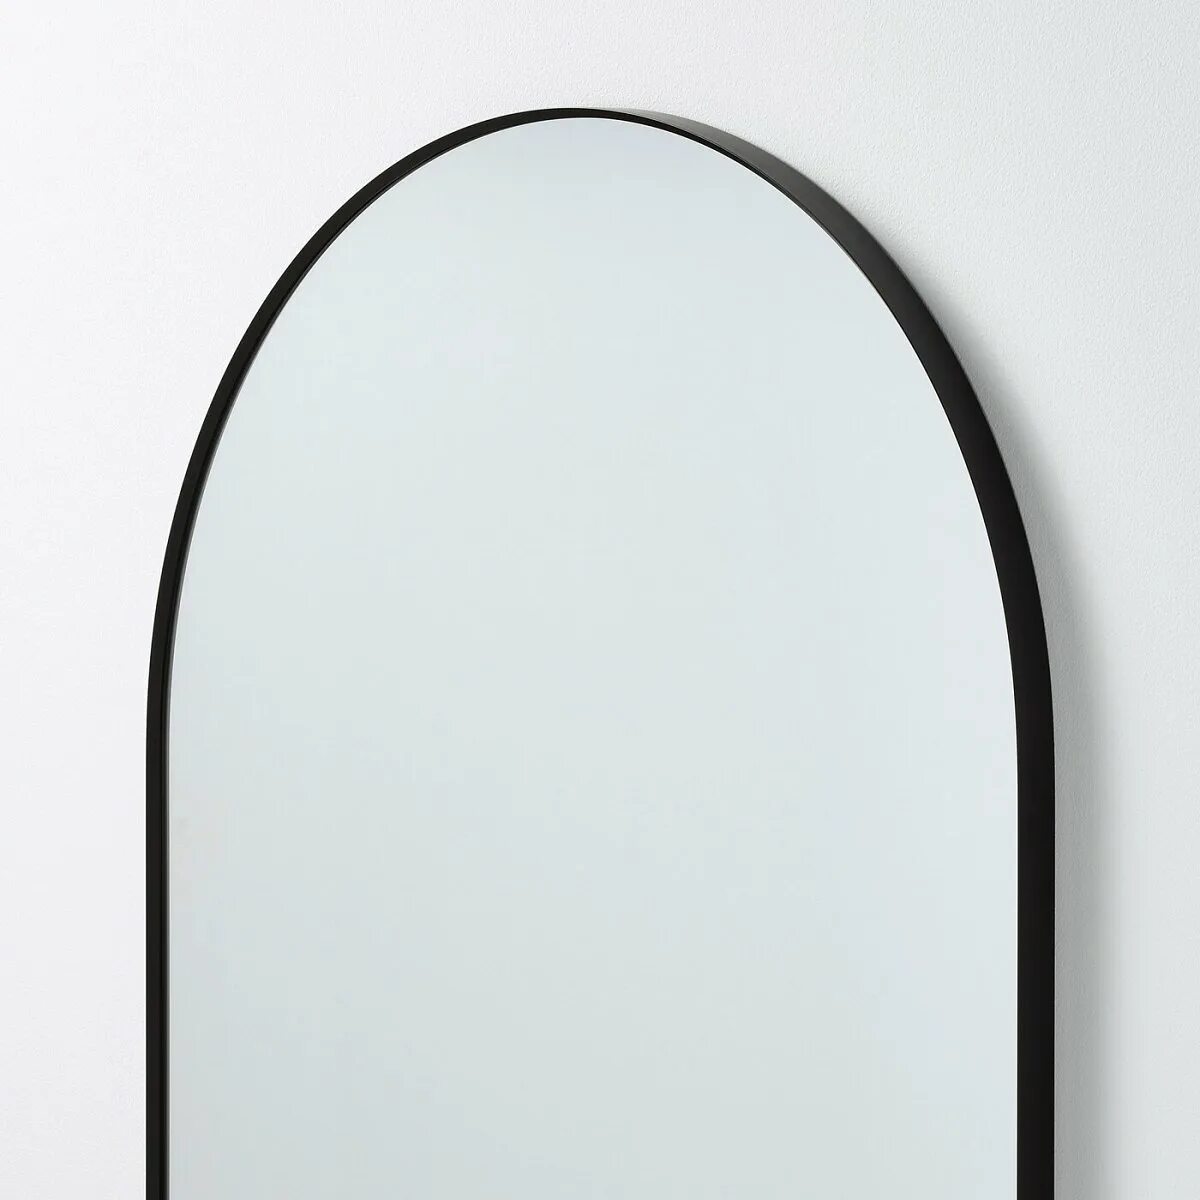 Темное зеркало отзывы. Lindbyn линдбюн зеркало, черный60x120 см. Зеркало икеа линдбюн 60 120. Линдбюн зеркало черный 60x120 см. Икеа зеркало Lindbyn линдбюн.